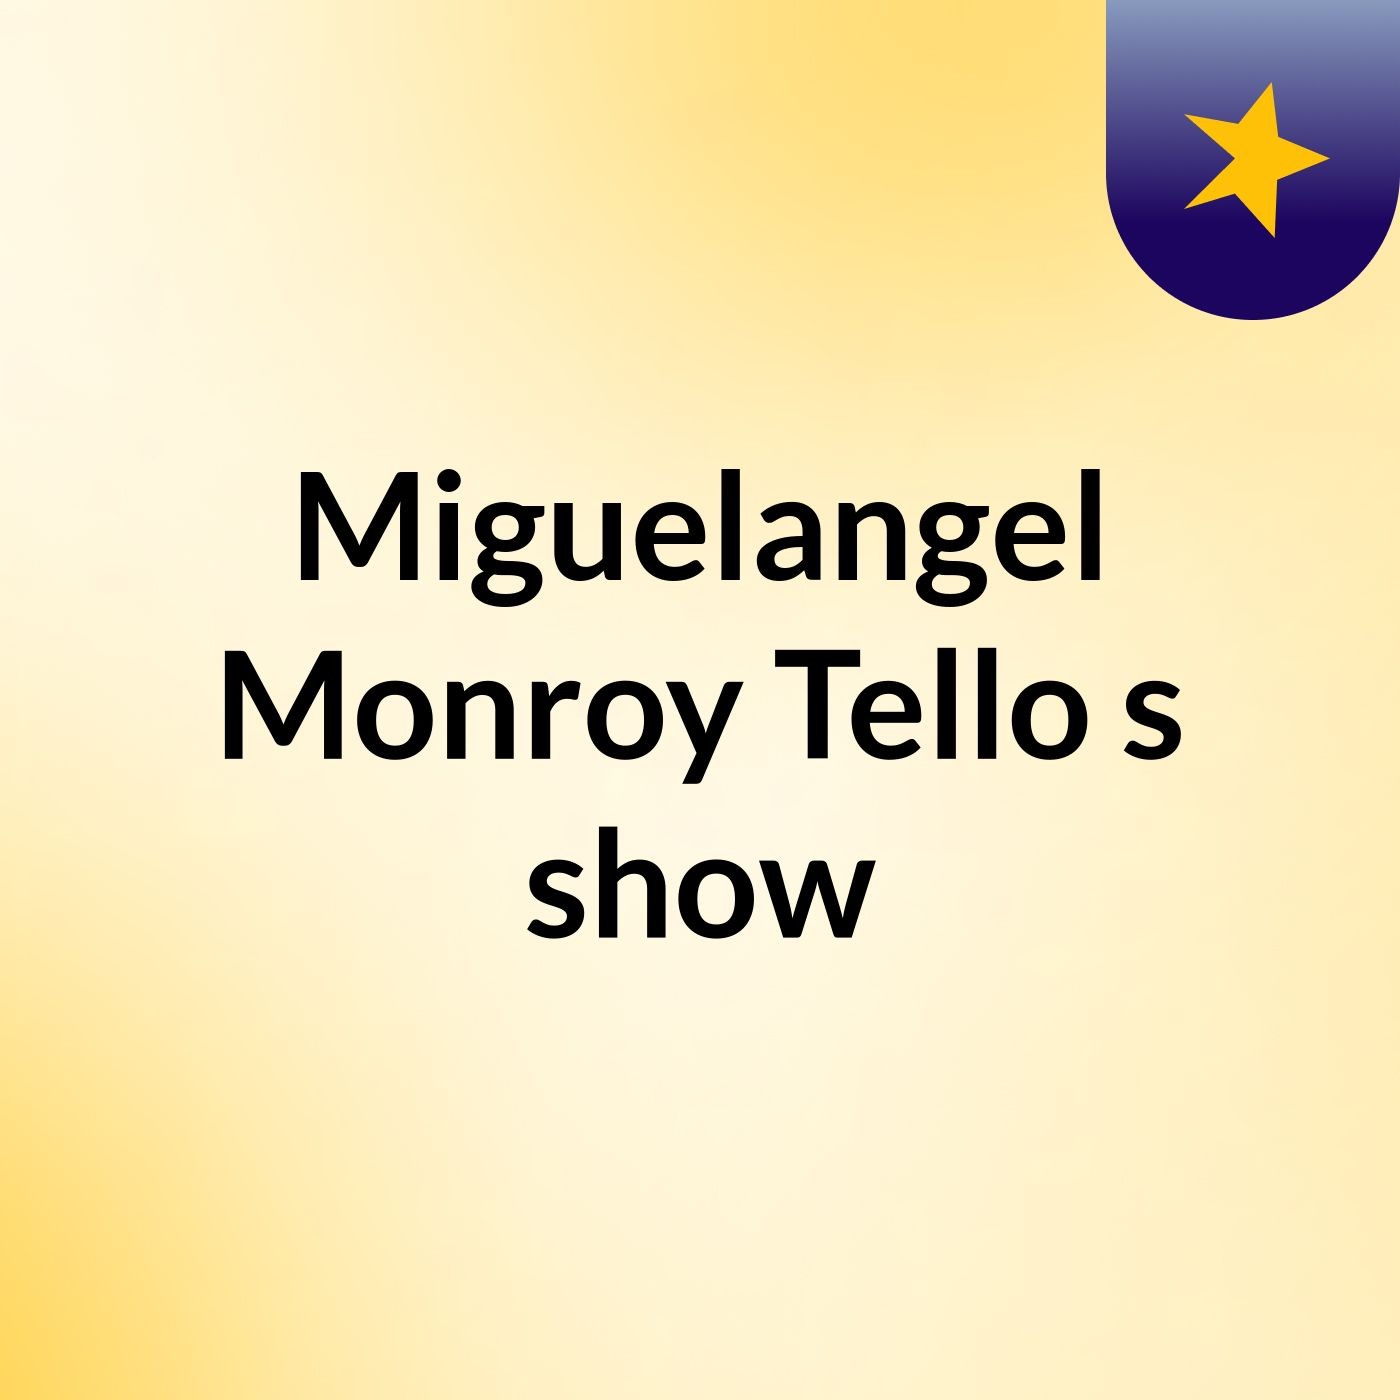 Miguelangel Monroy Tello's show